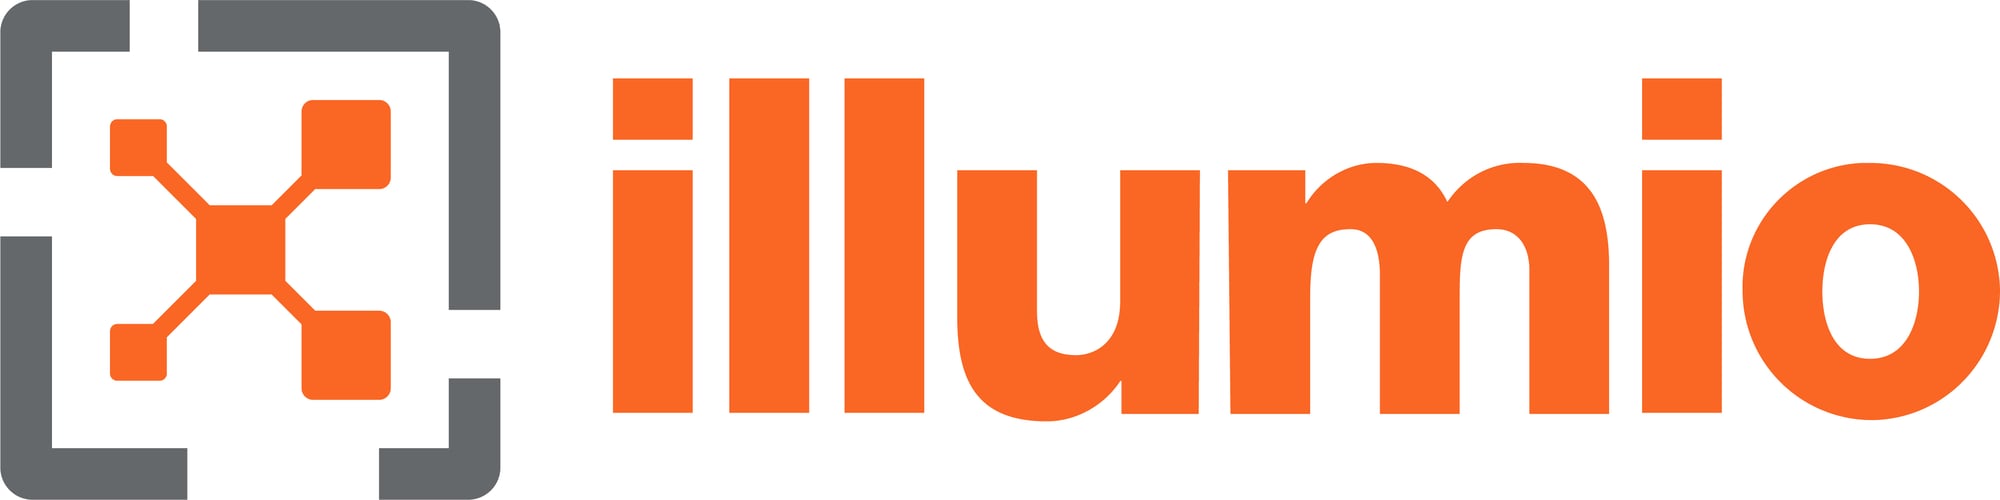 Illumio_Logo_Gray_Orange_RGB